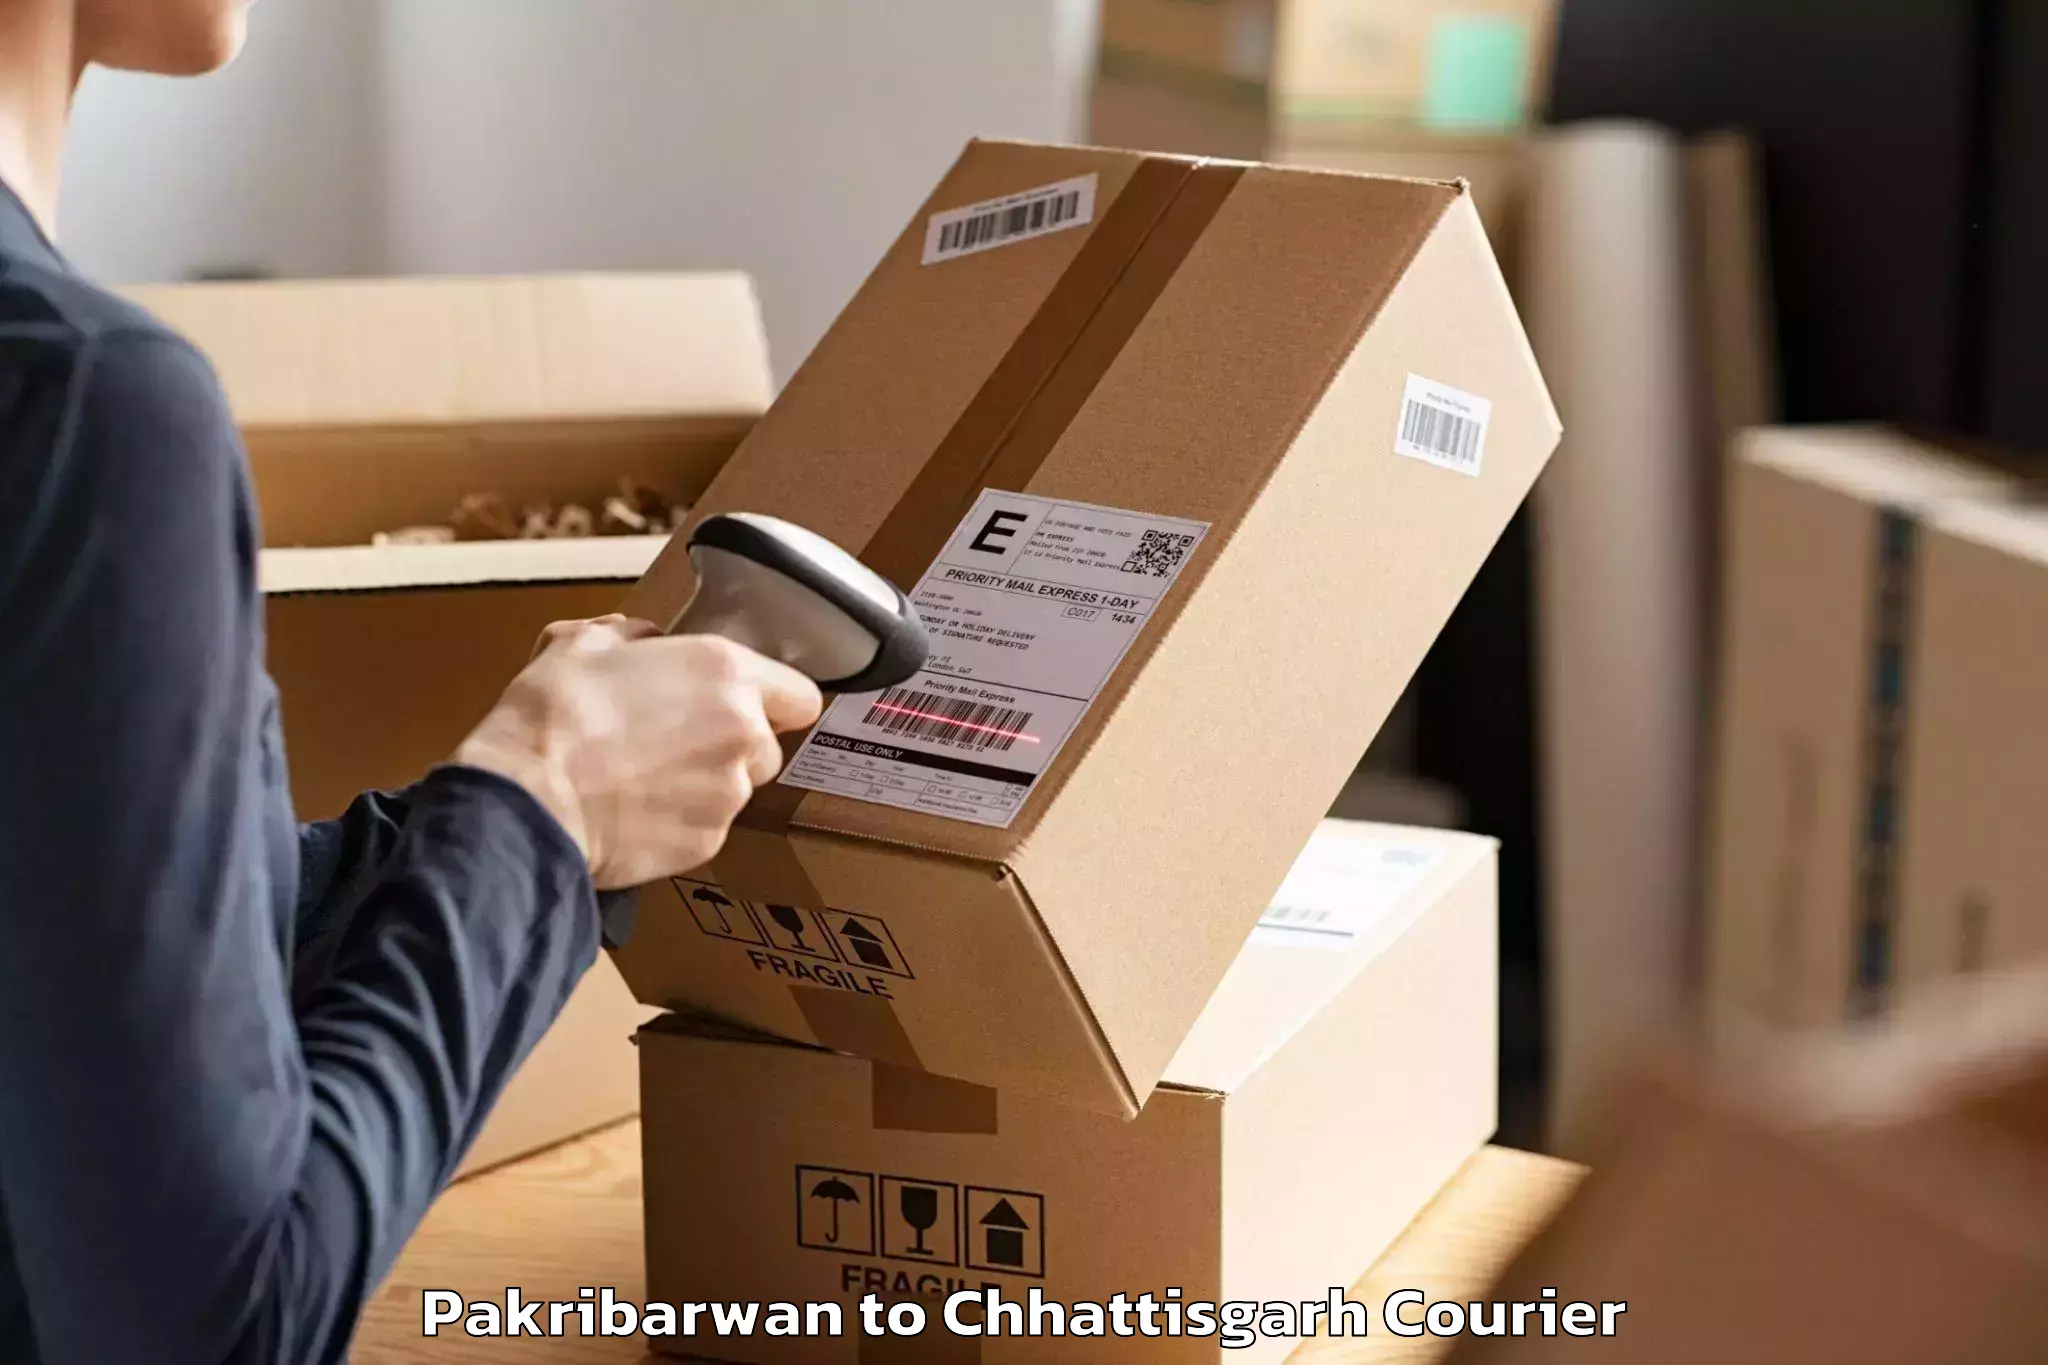 Professional moving company Pakribarwan to Chhattisgarh